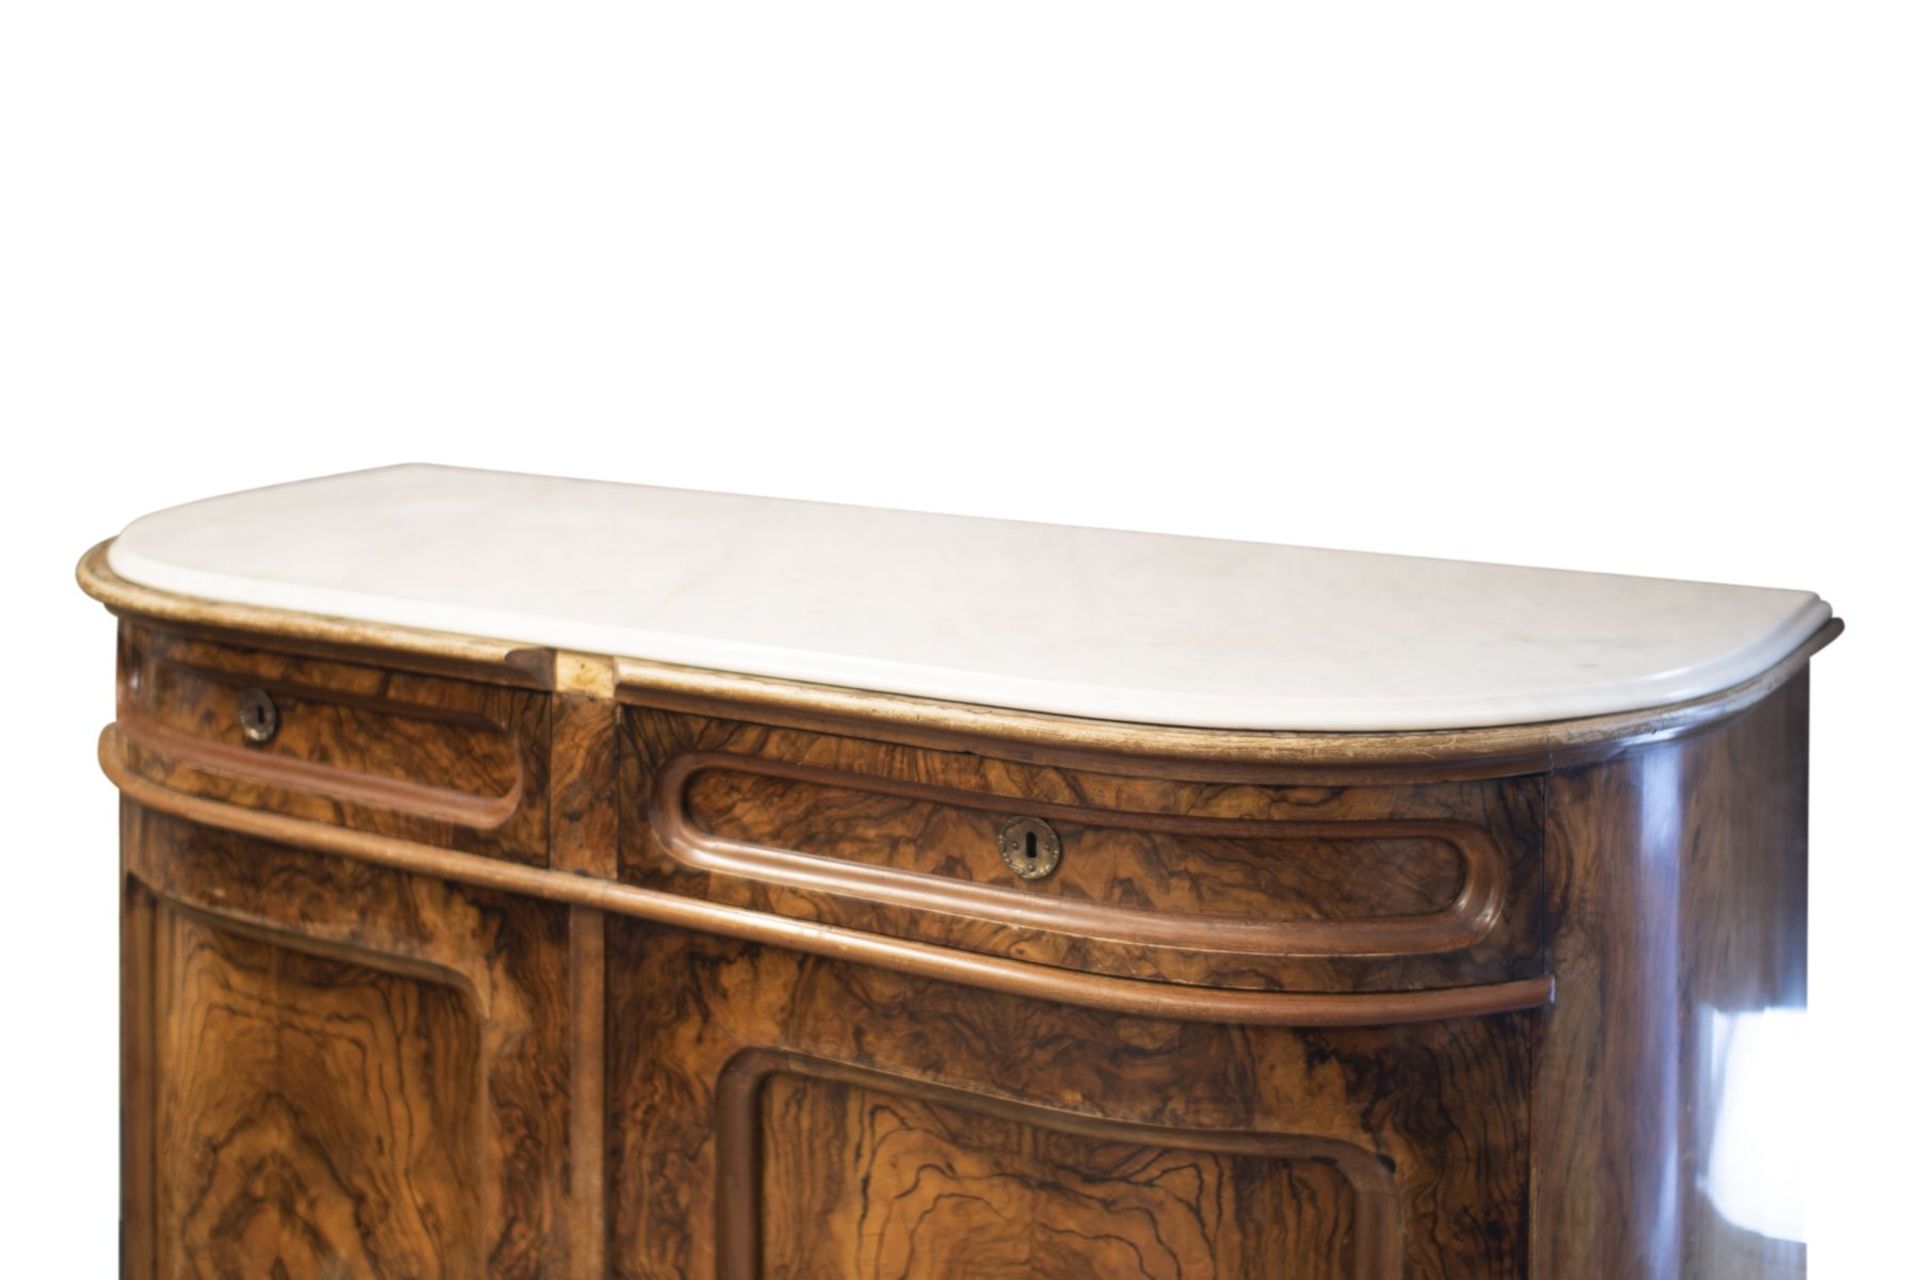 Salon Dresser with Profiled Marble Top | Salon Kommode mit profilierter Marmorplatte - Image 4 of 6